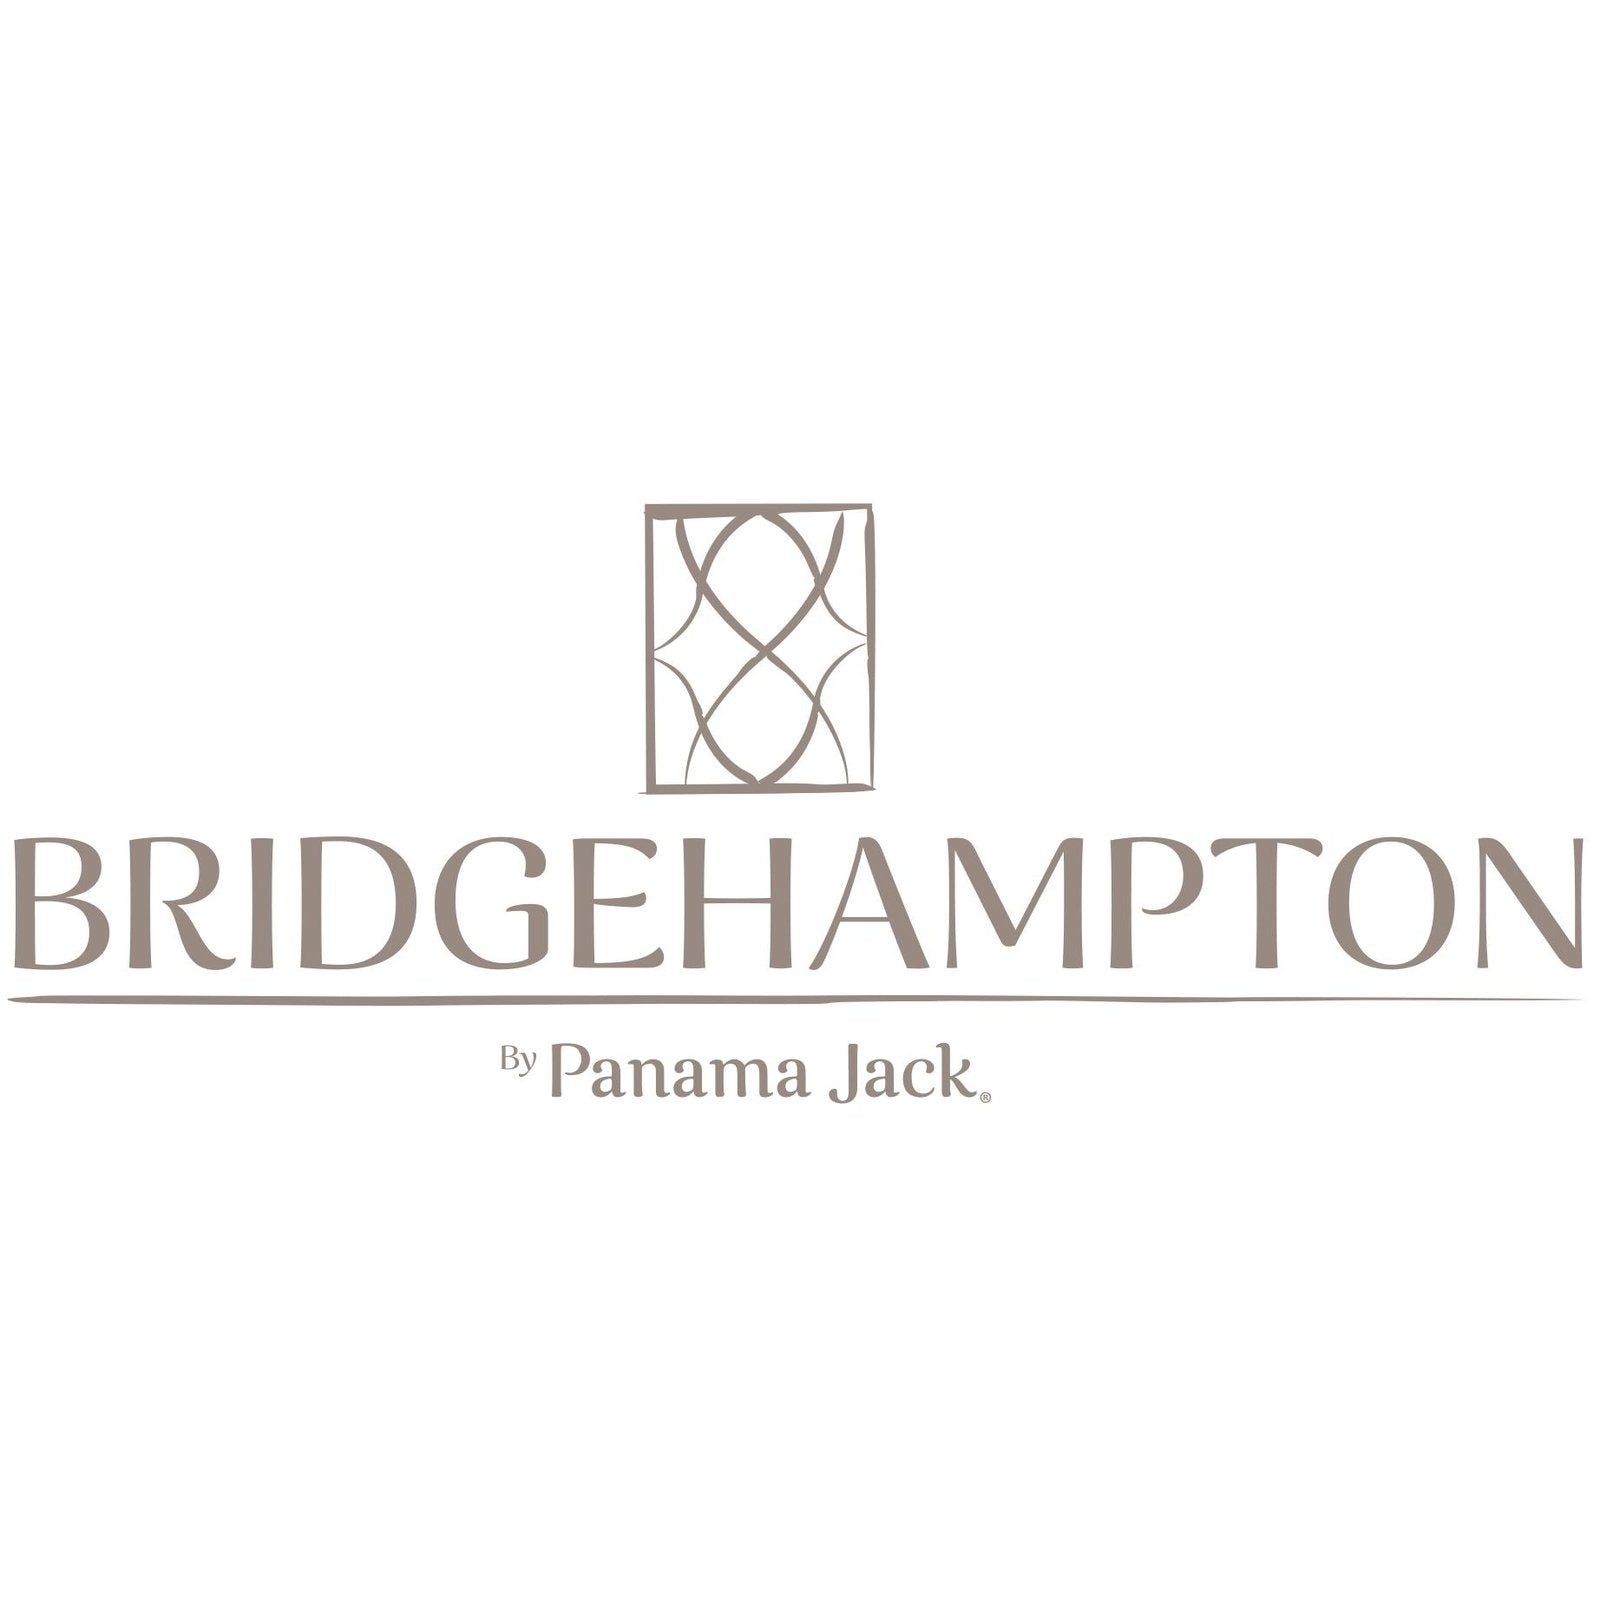 Bridgehampton - By Panama Jack